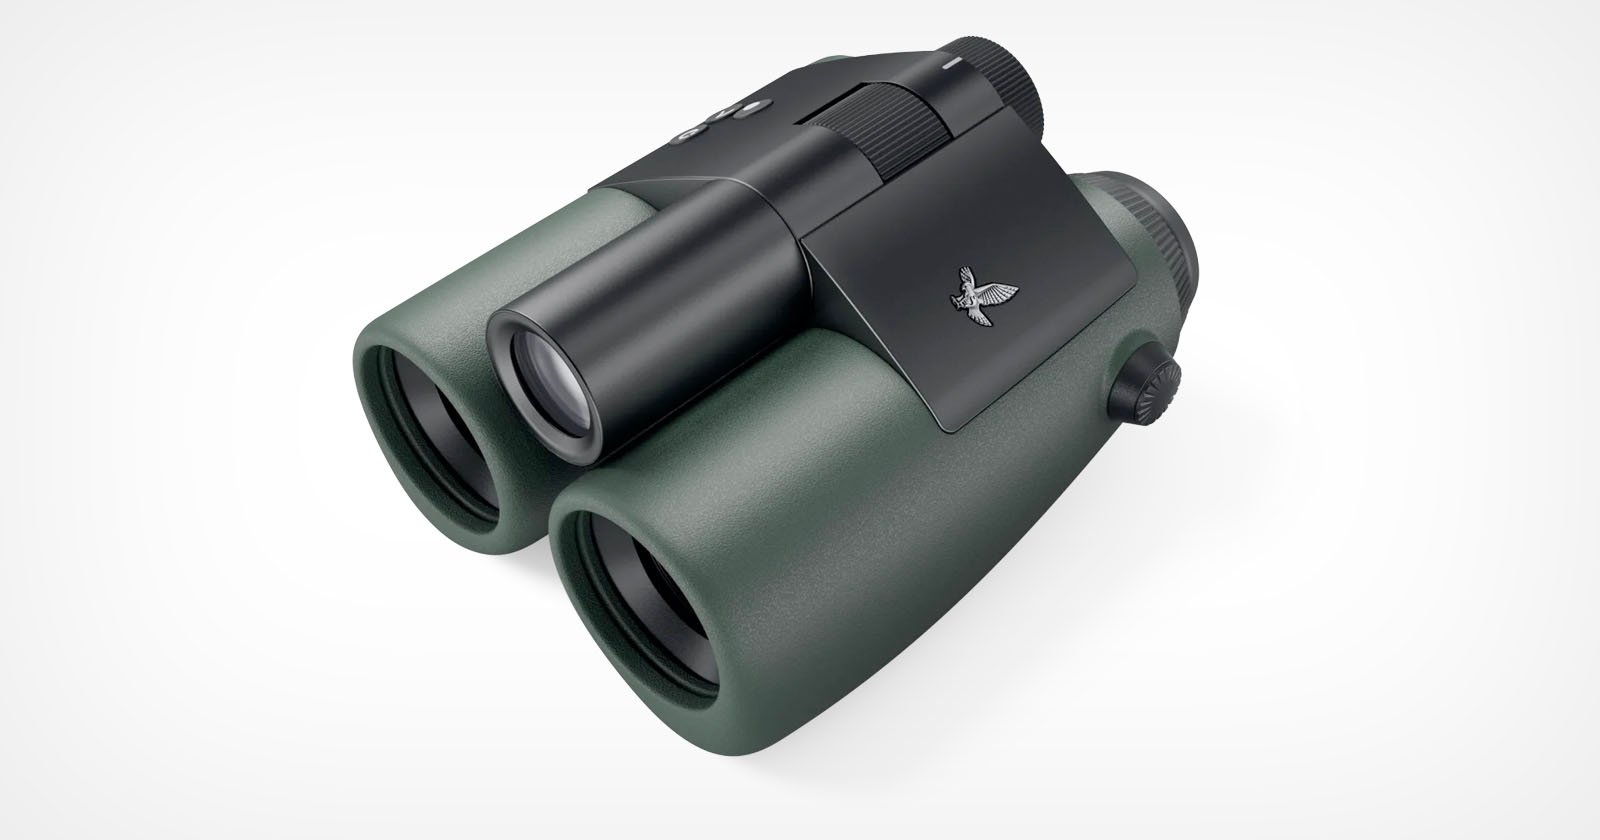  swarovski visio binoculars are also ai-powered 13mp camera 